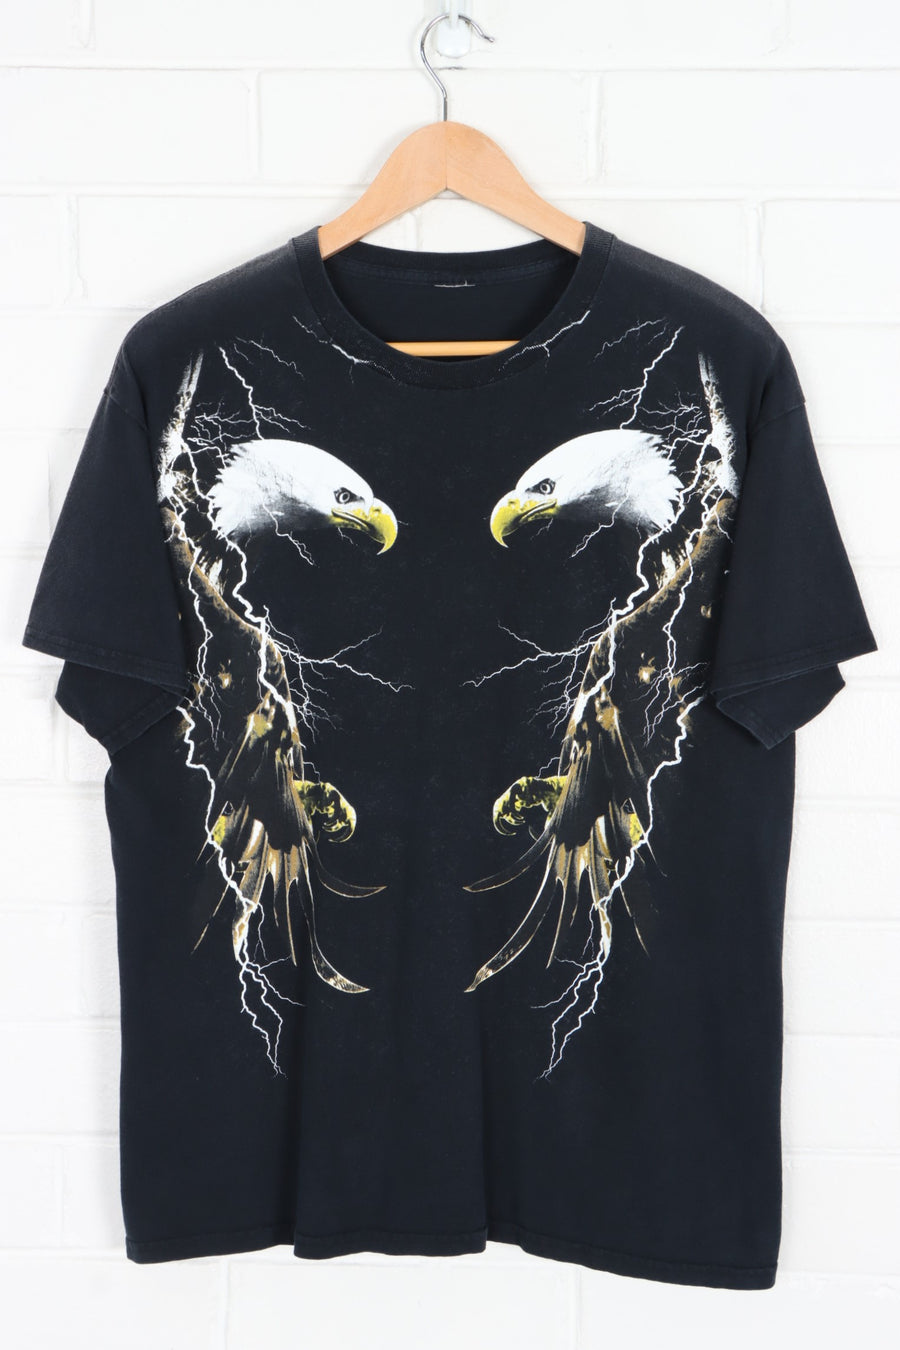 Double Bald Eagle Lightning Thunder Black T-Shirt (L)